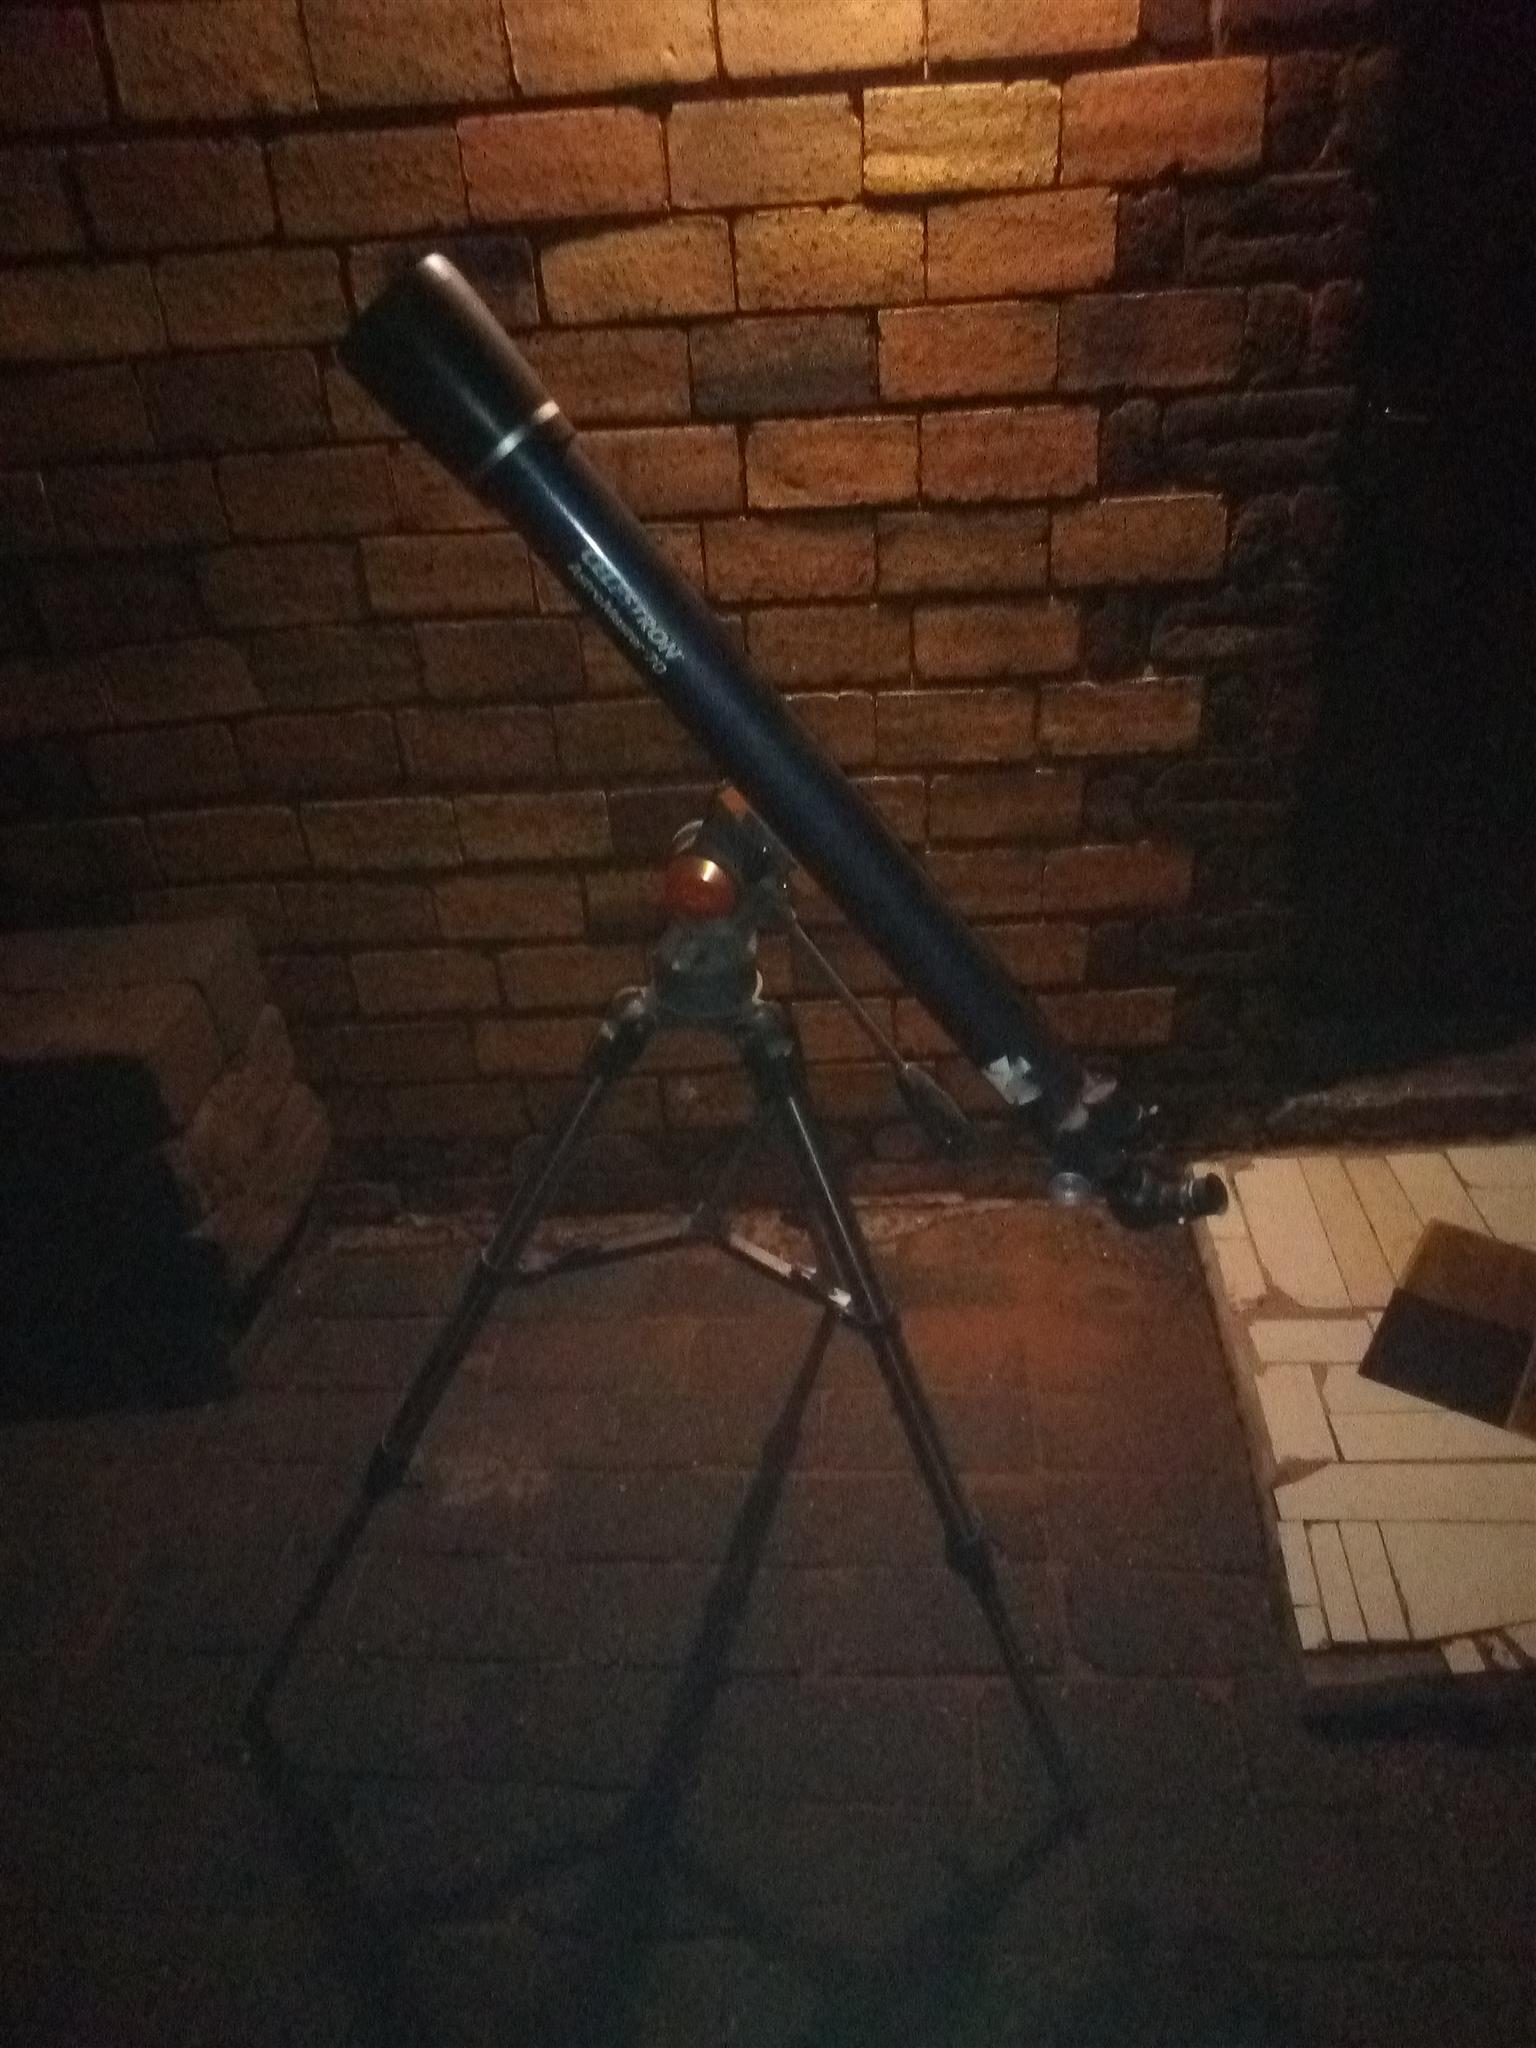 Telescope for sale